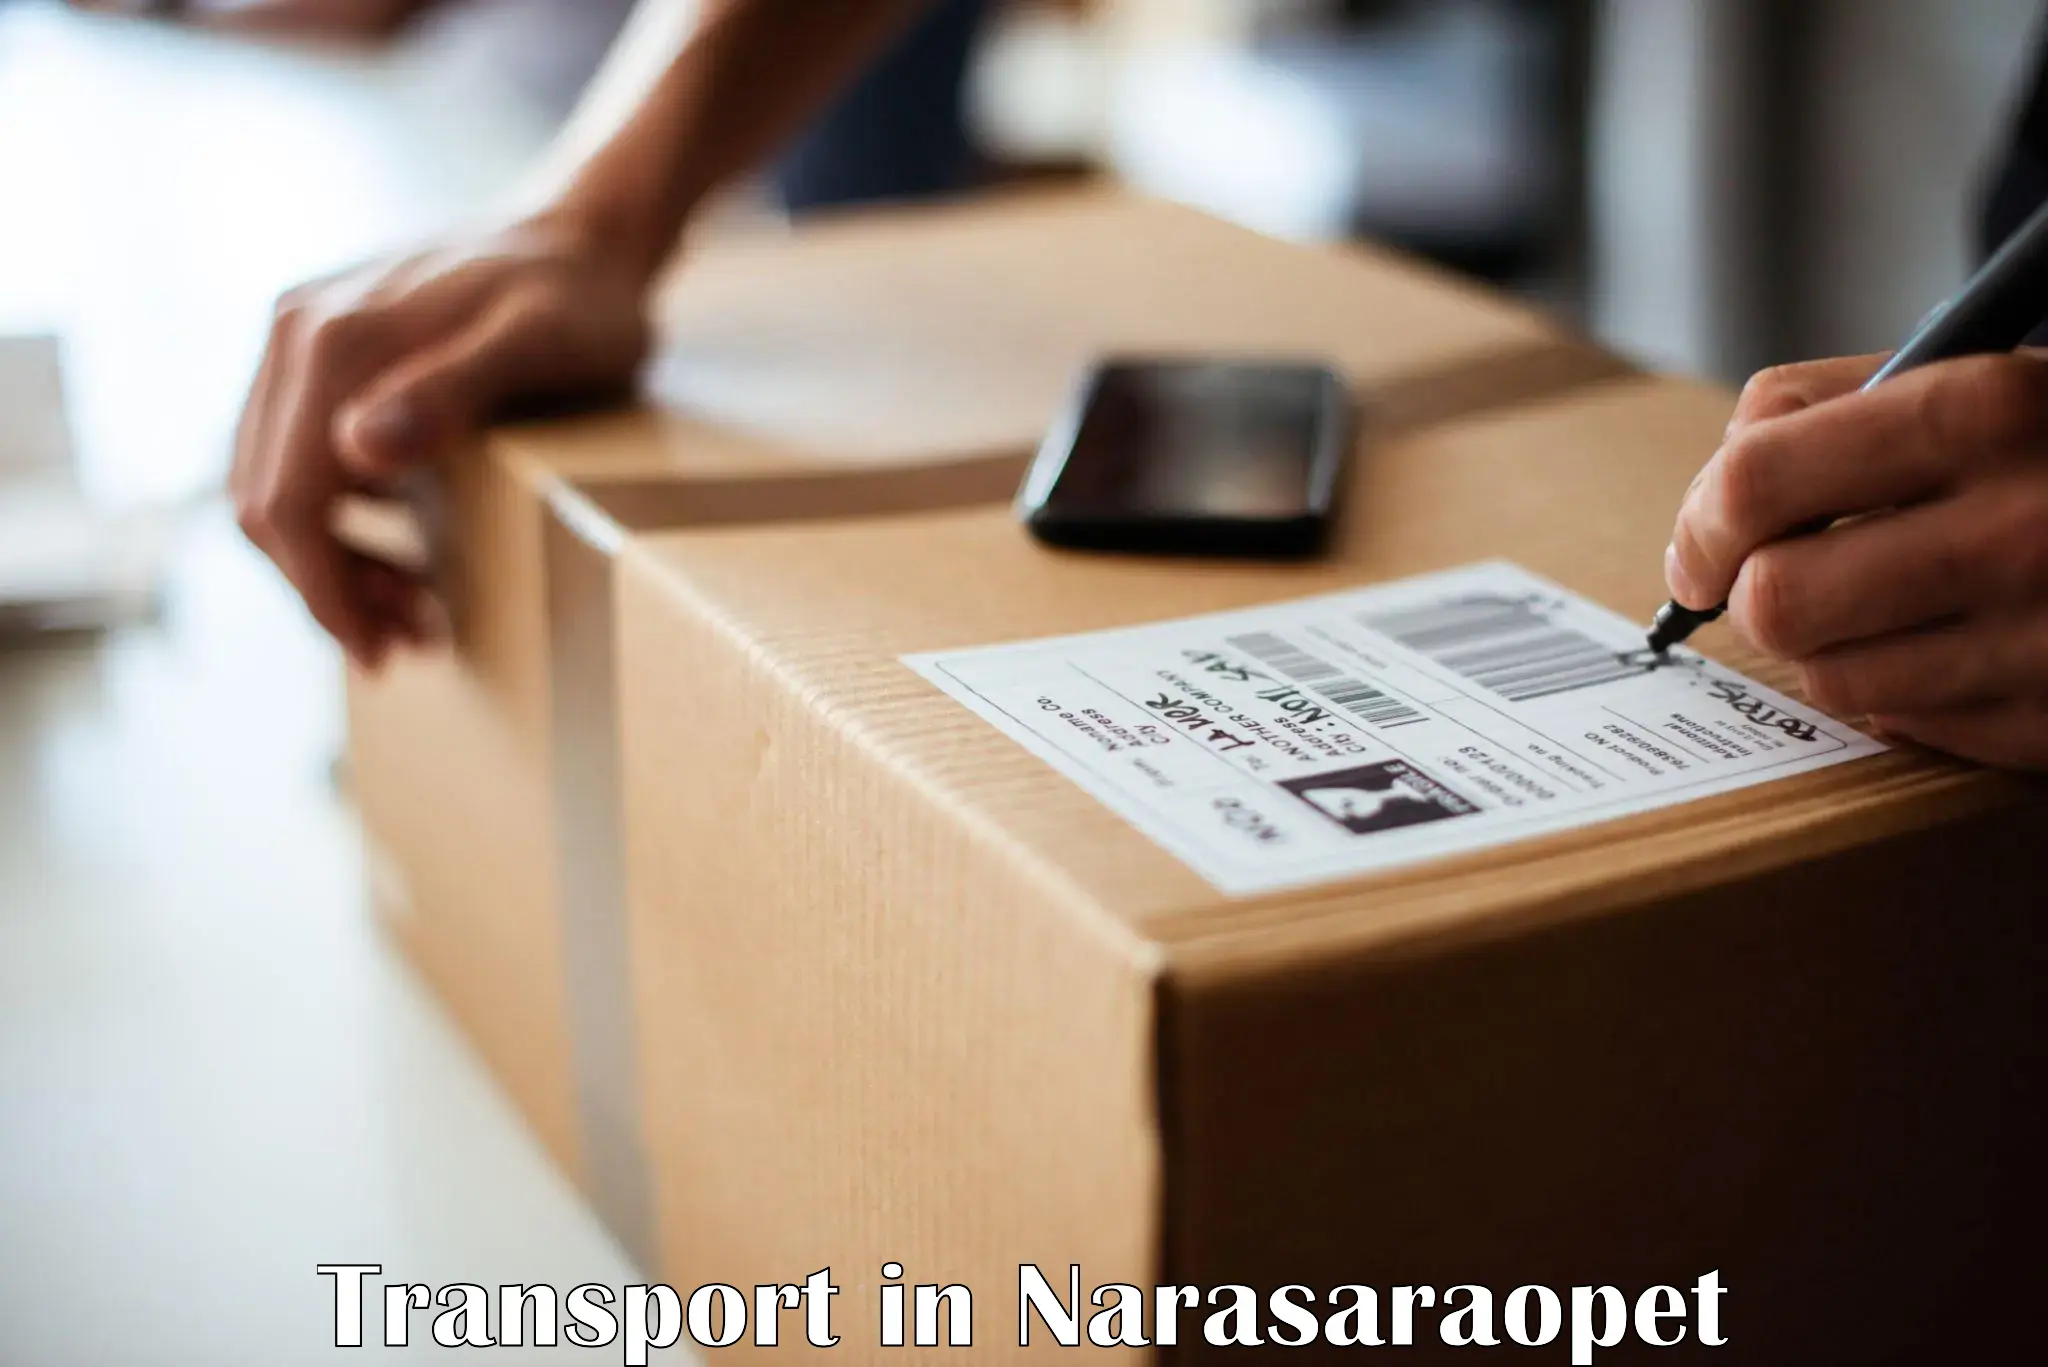 Online transport in Narasaraopet